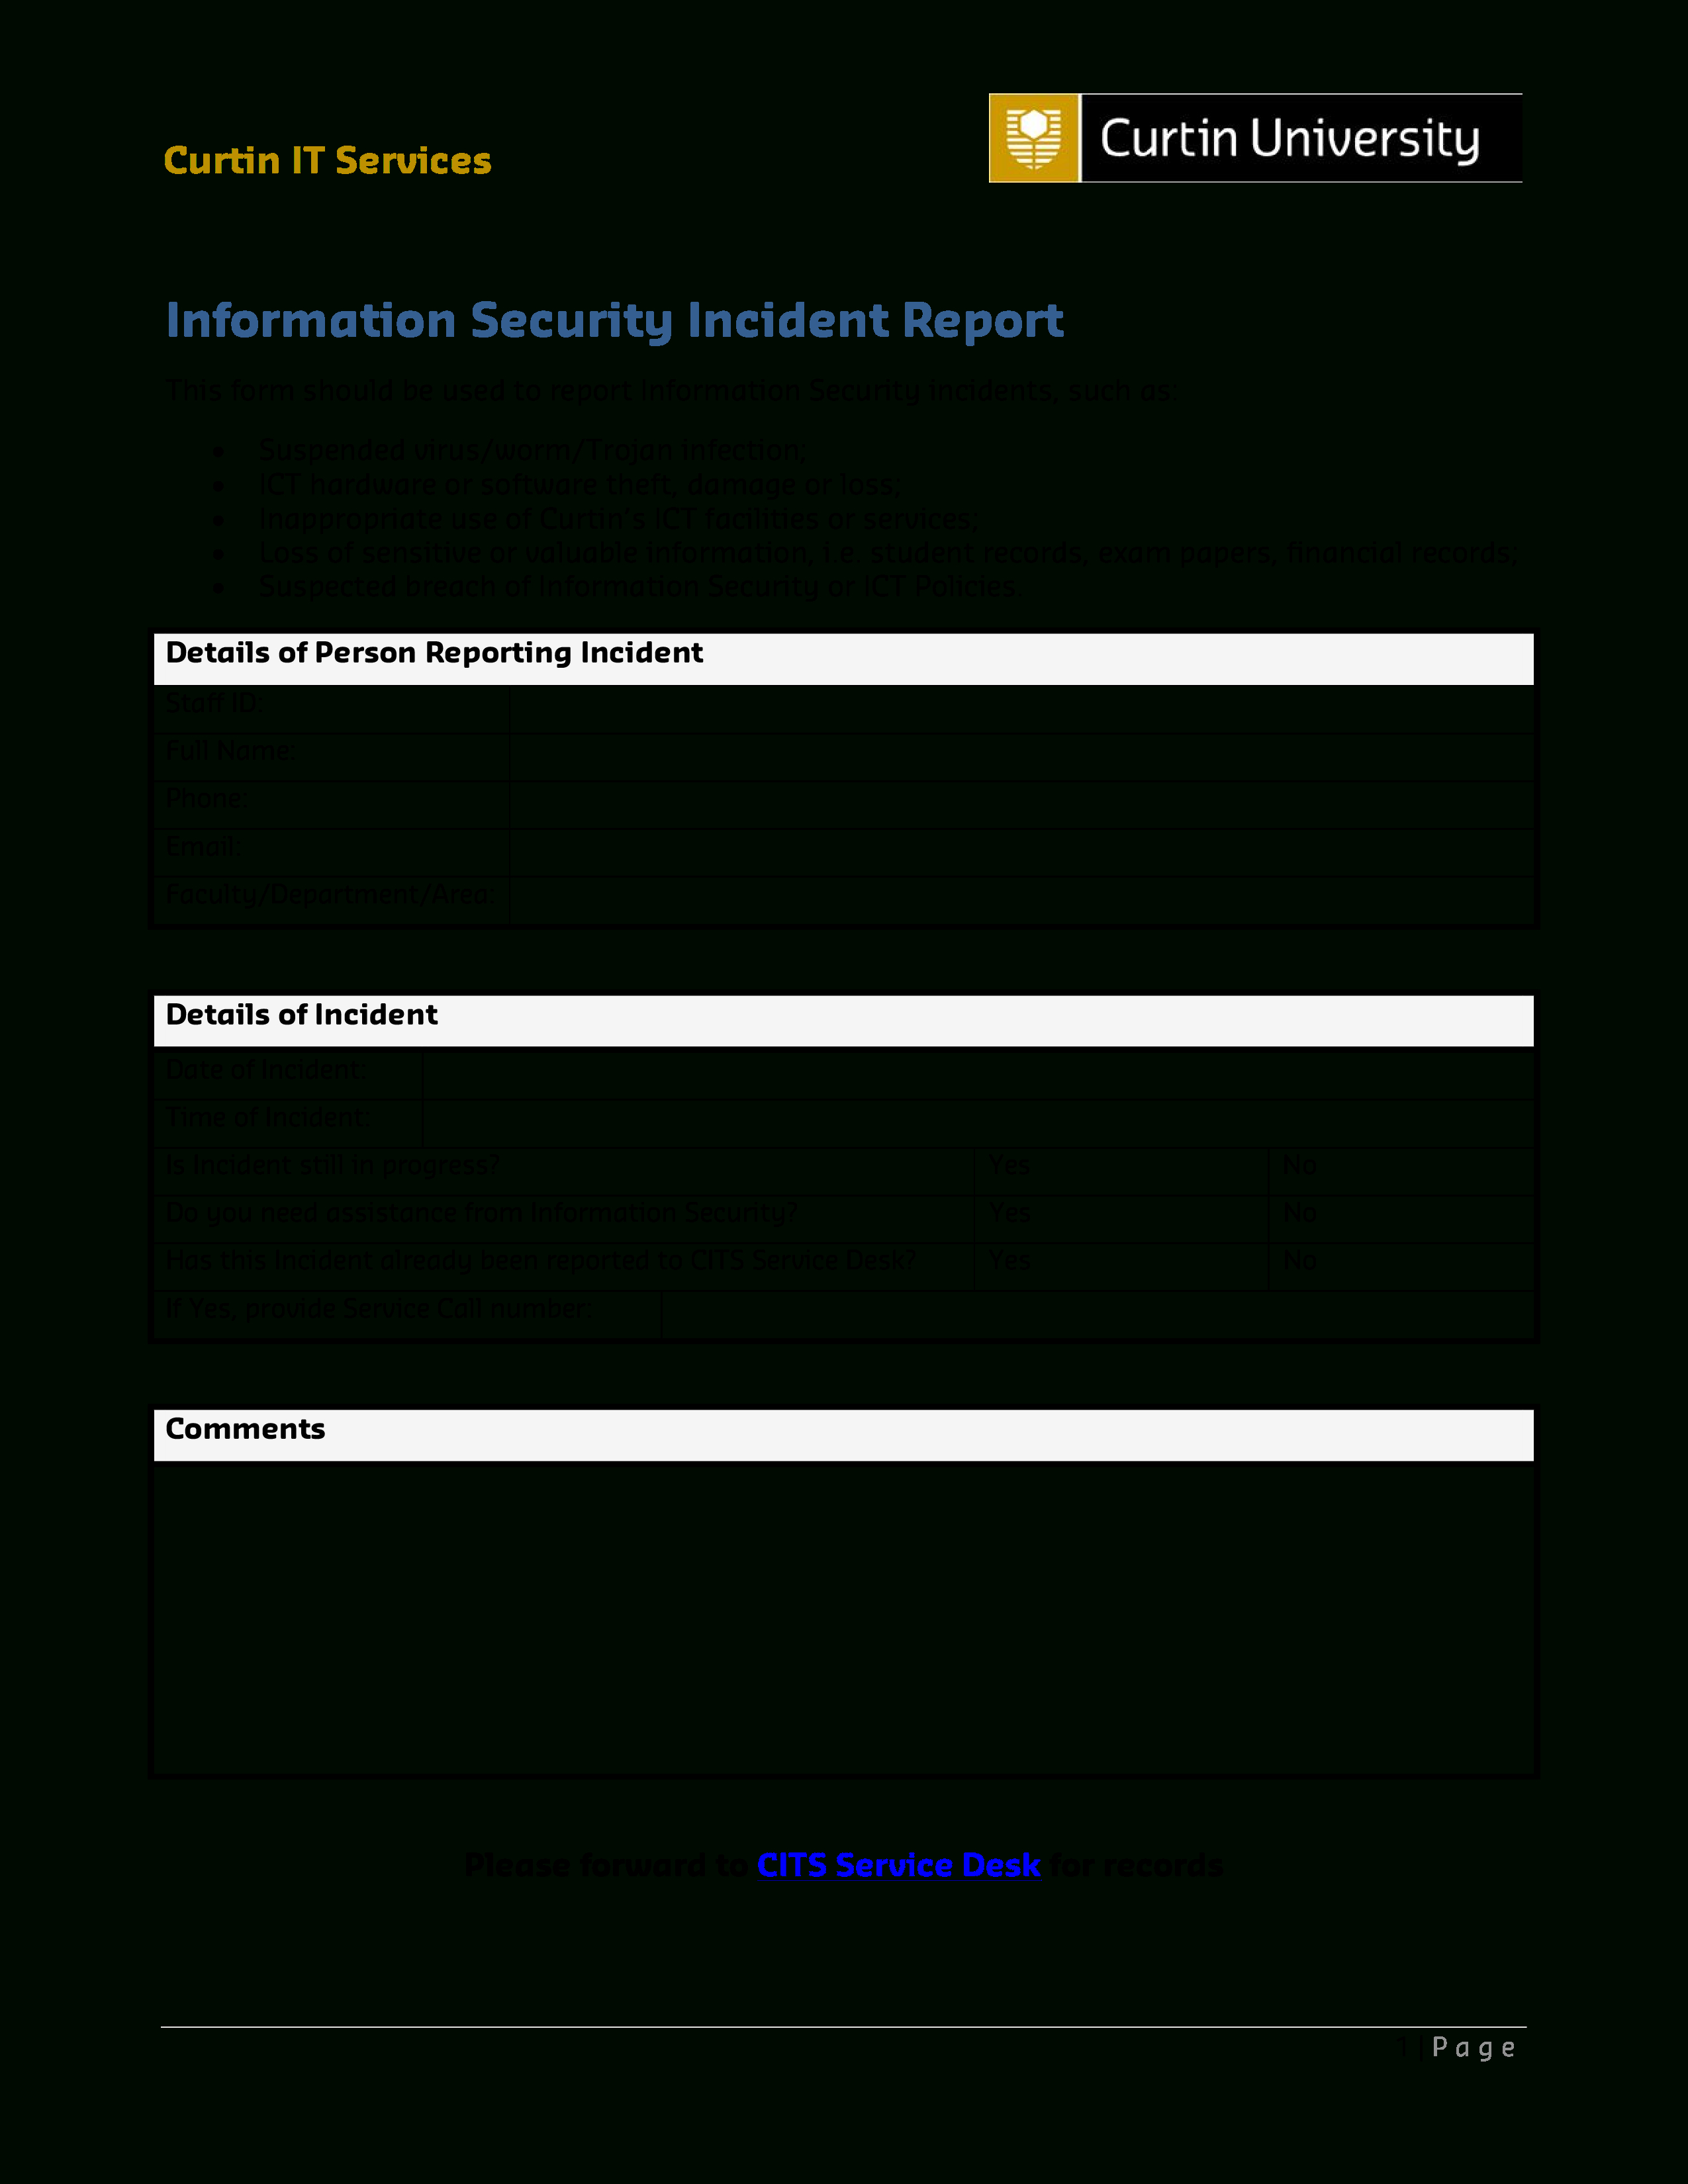 010 Security Incident Report Template Ideas 808C99D79Df8 1 Inside Information Security Report Template